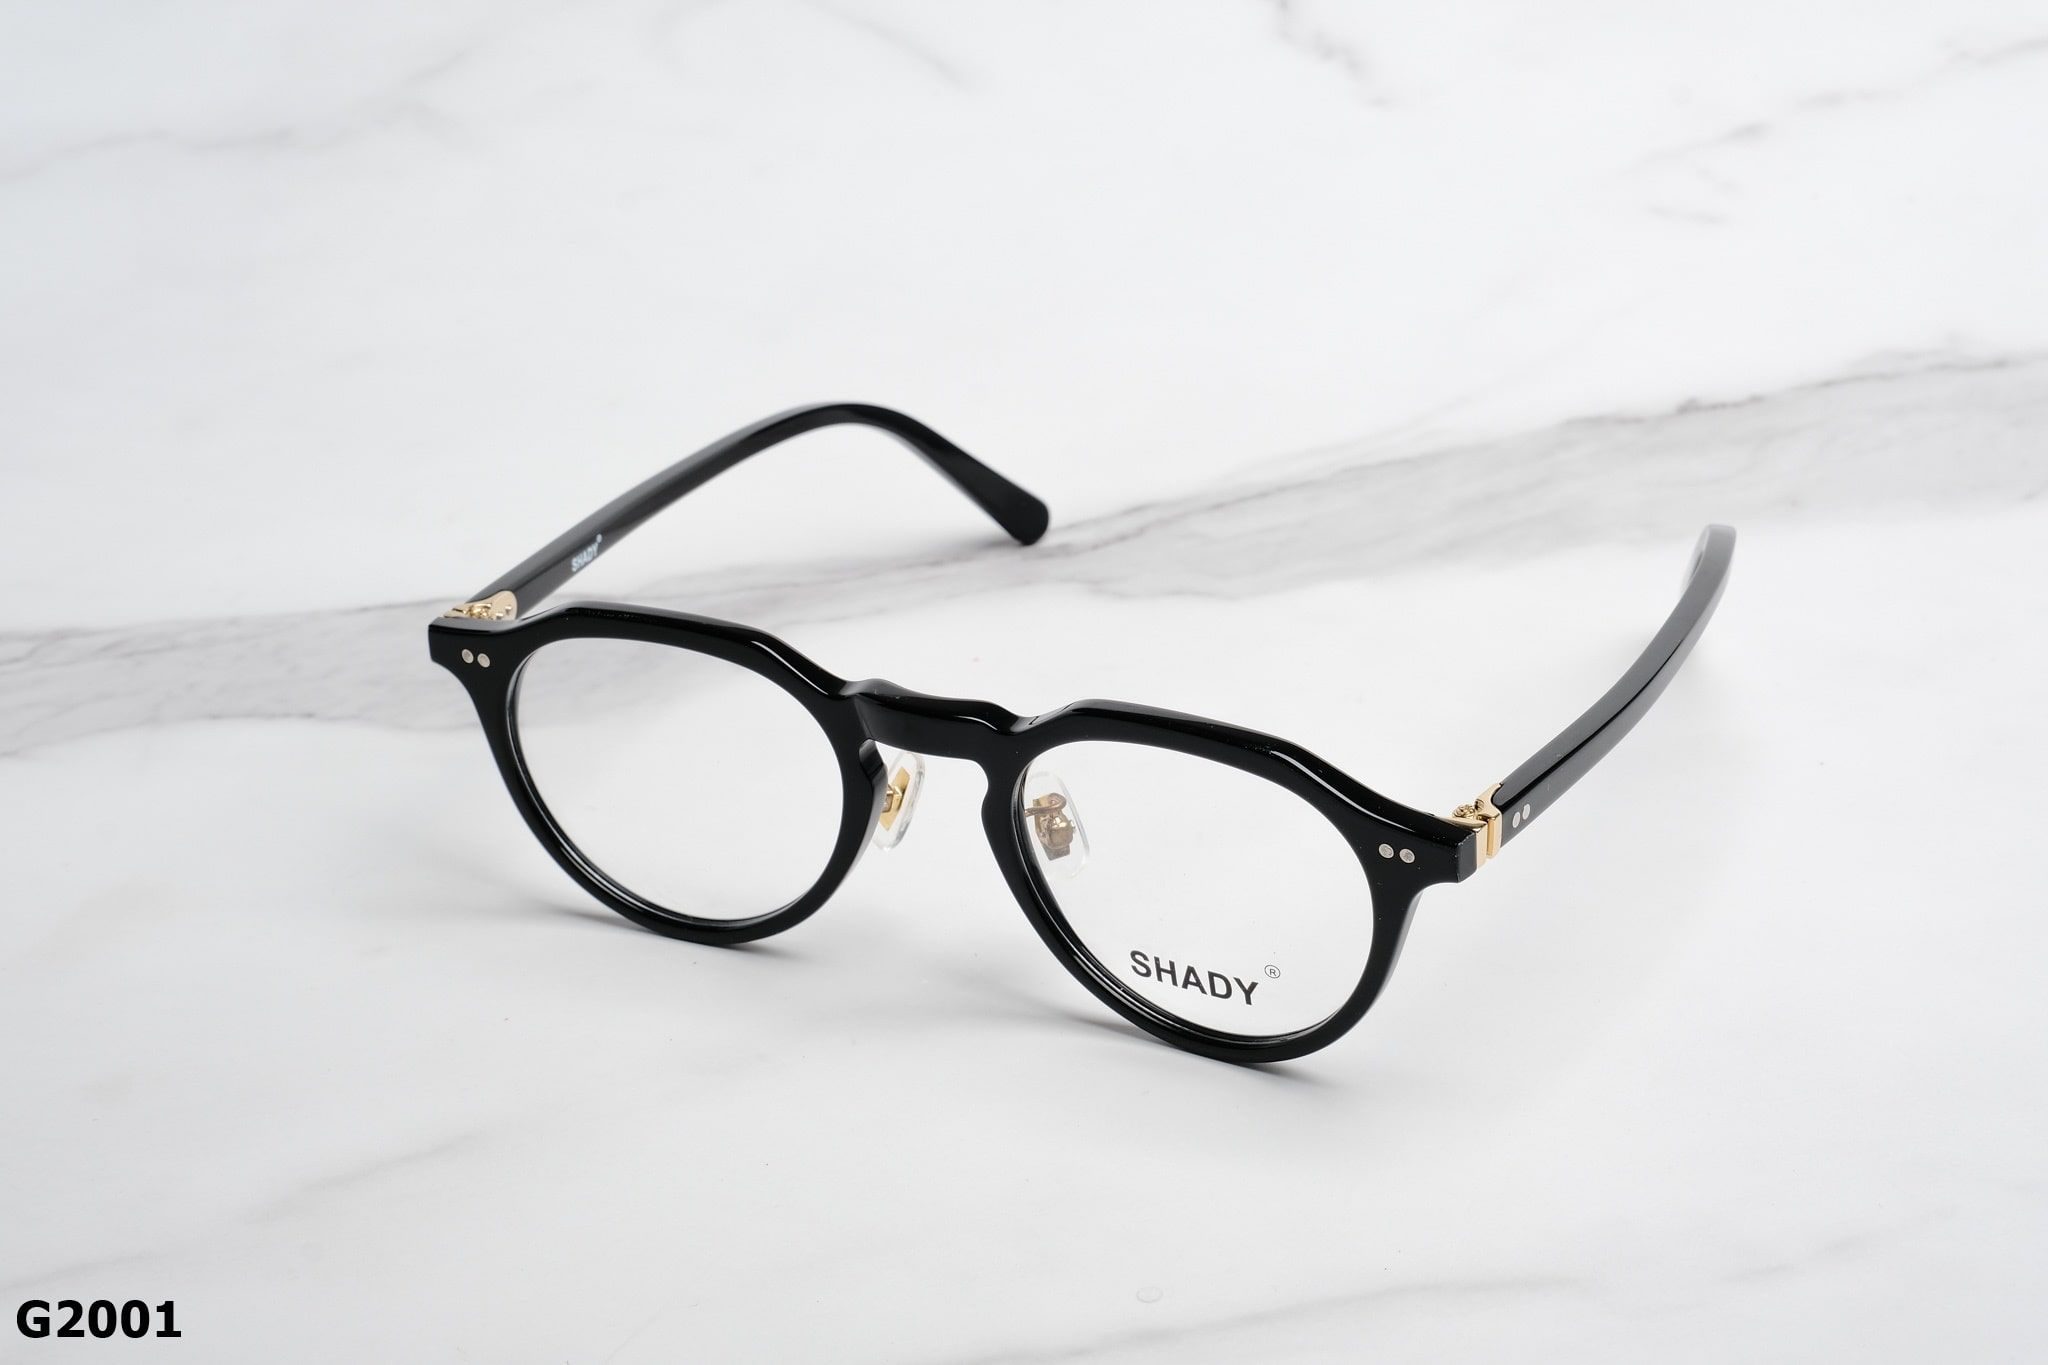  SHADY Eyewear - Glasses - G2001 